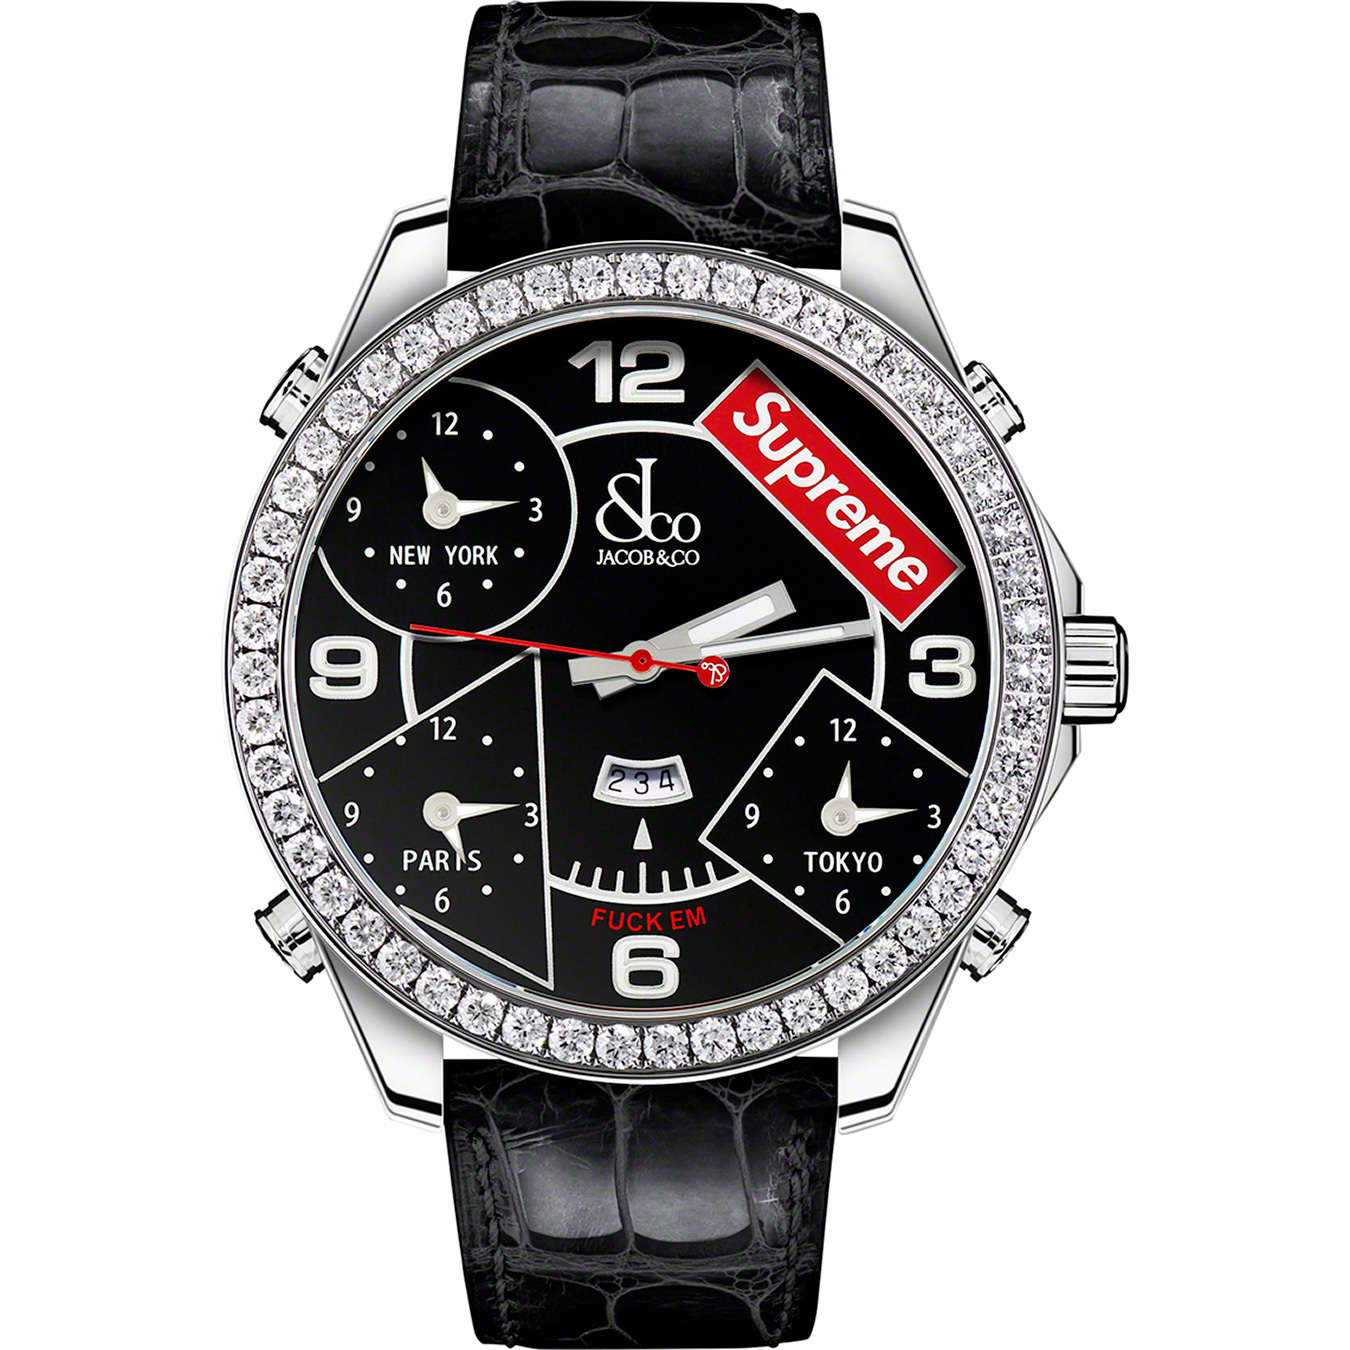 Supreme®/Jacob & Co Time Zone 47mm Watch - Supreme Community